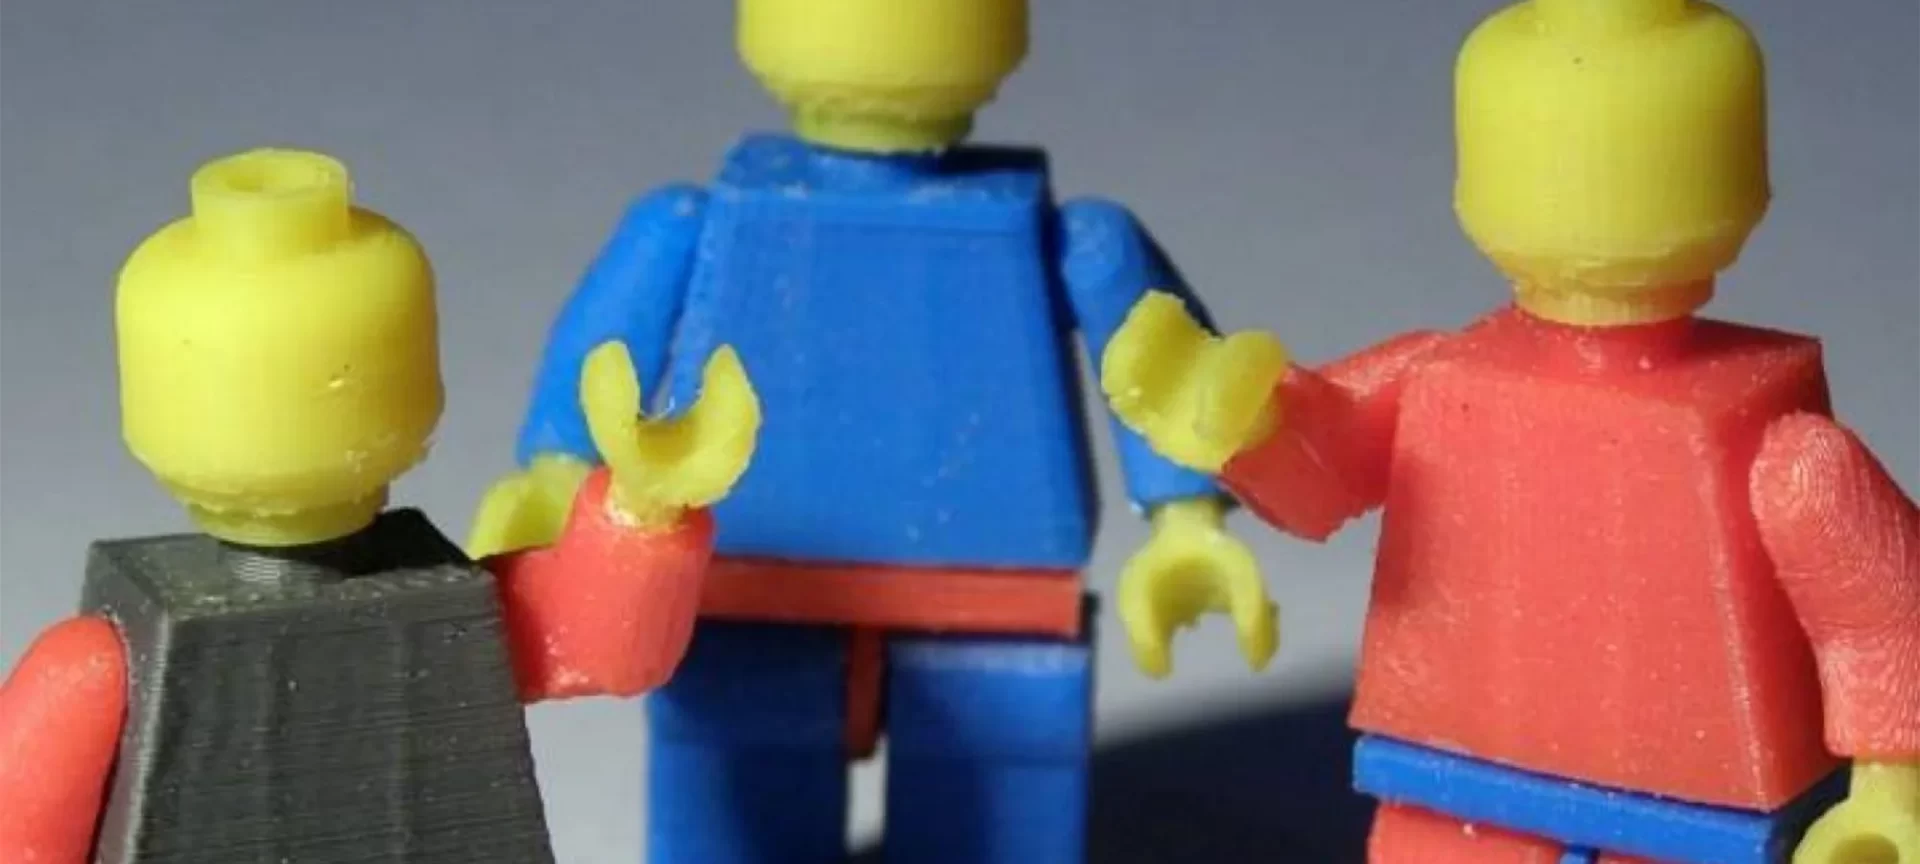 hipocresía juguete Mendicidad 3D Print Lego - The Ultimate Guide to Lego 3D Printing - Pick 3D Printer